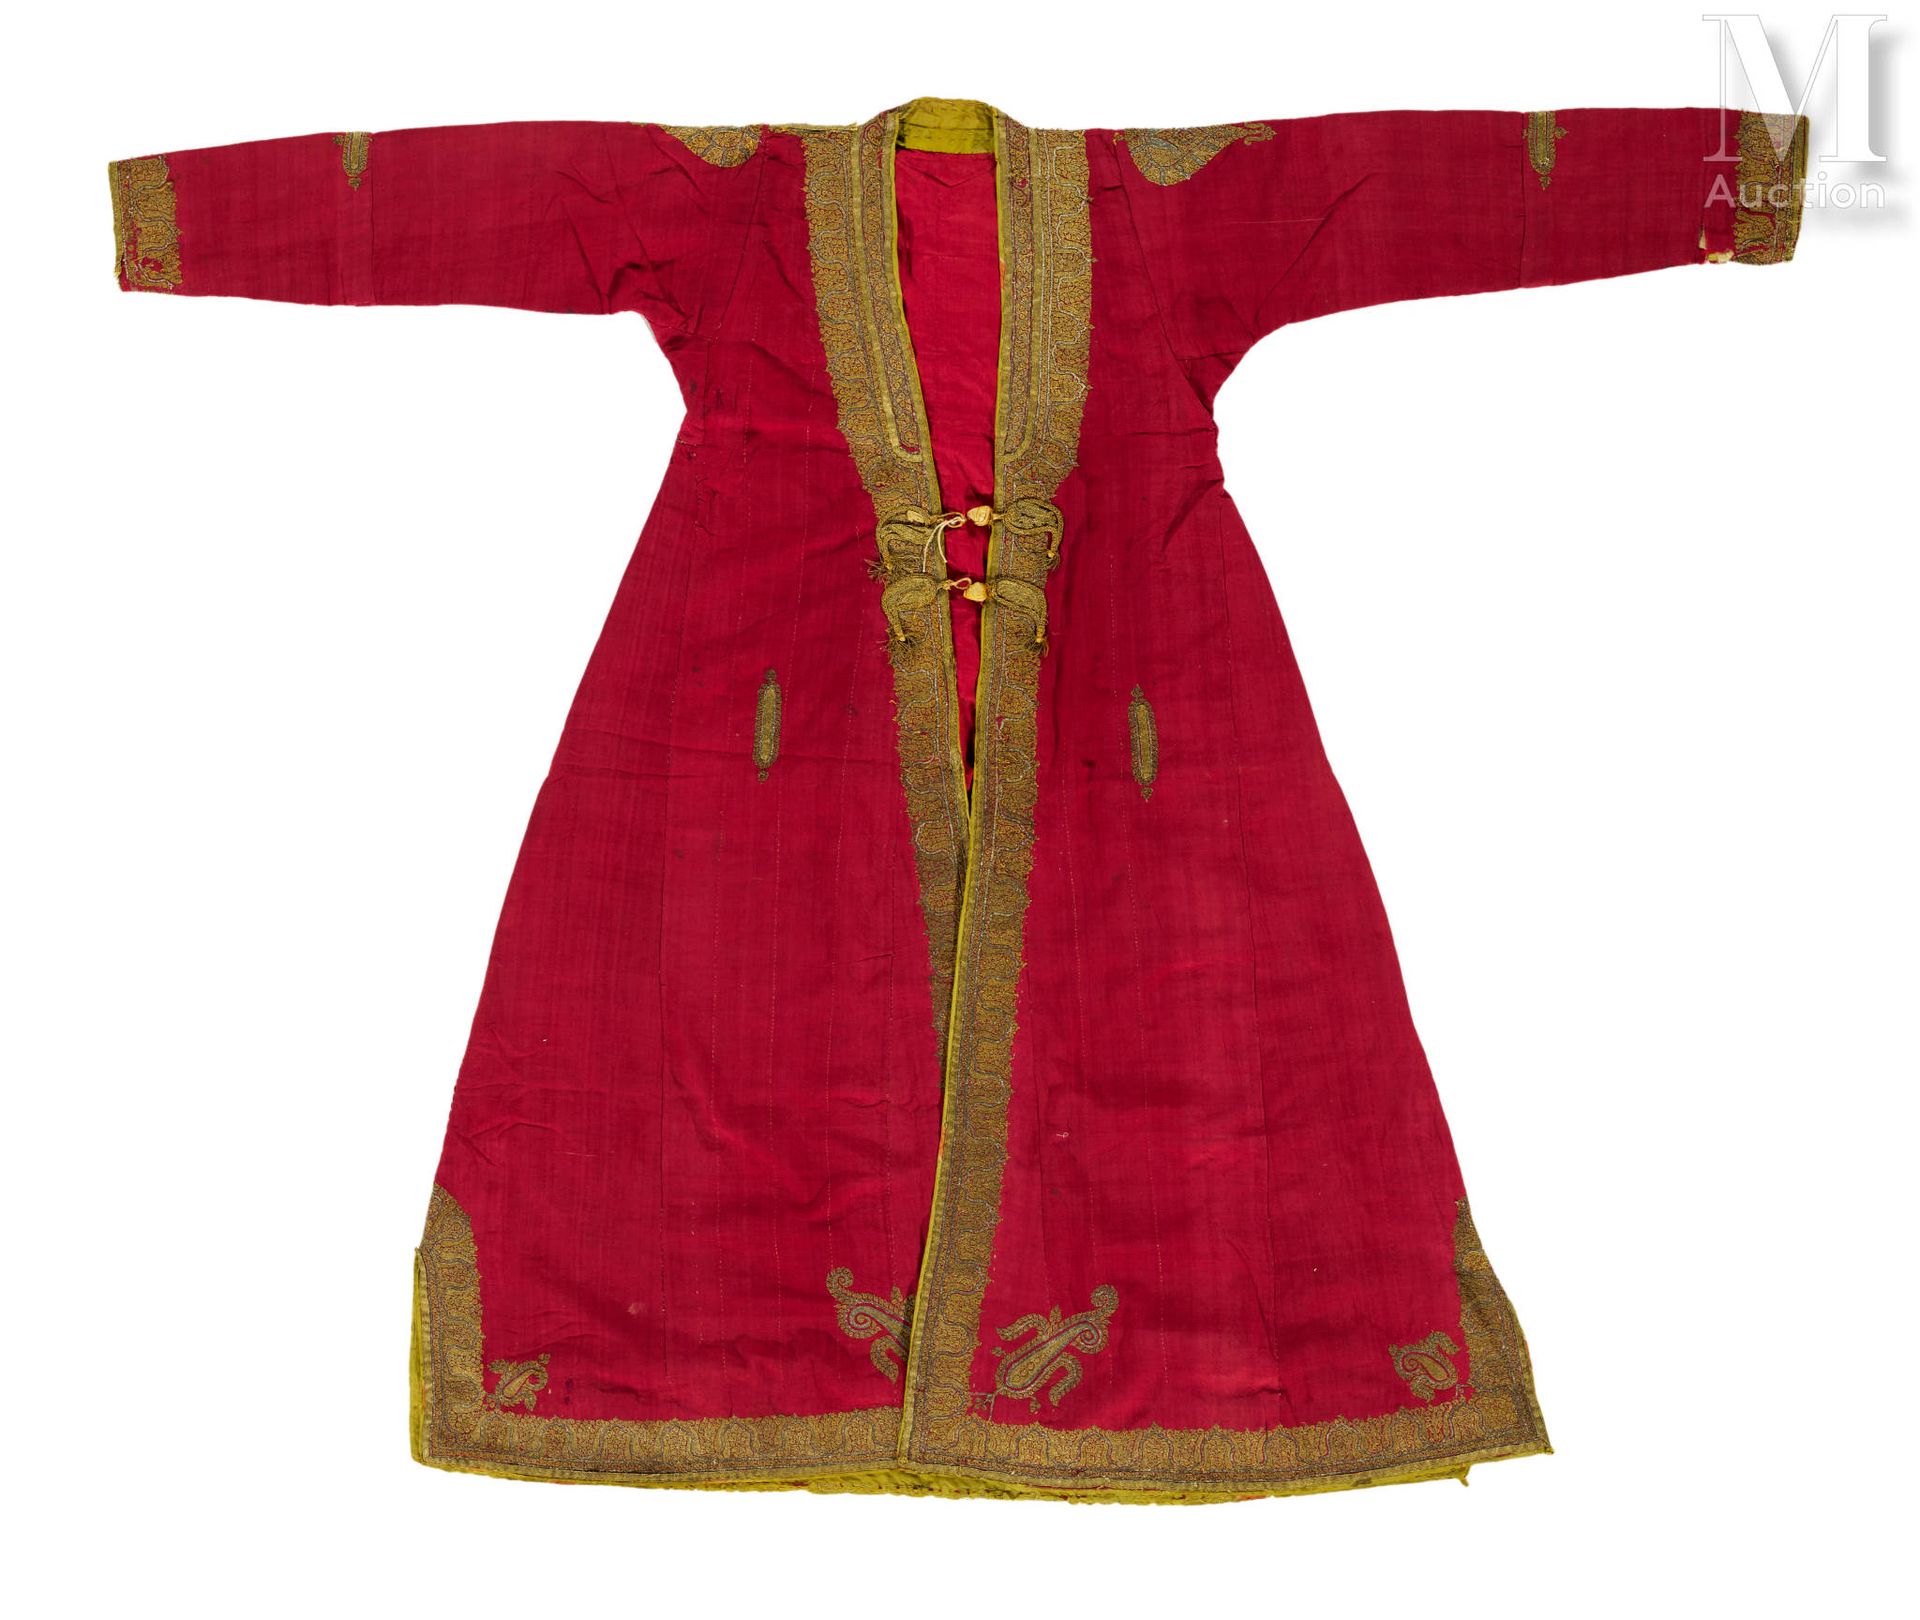 Choga - Robe sikh India, Punjab, hacia 1850-1870
Vestido masculino (choga) de al&hellip;